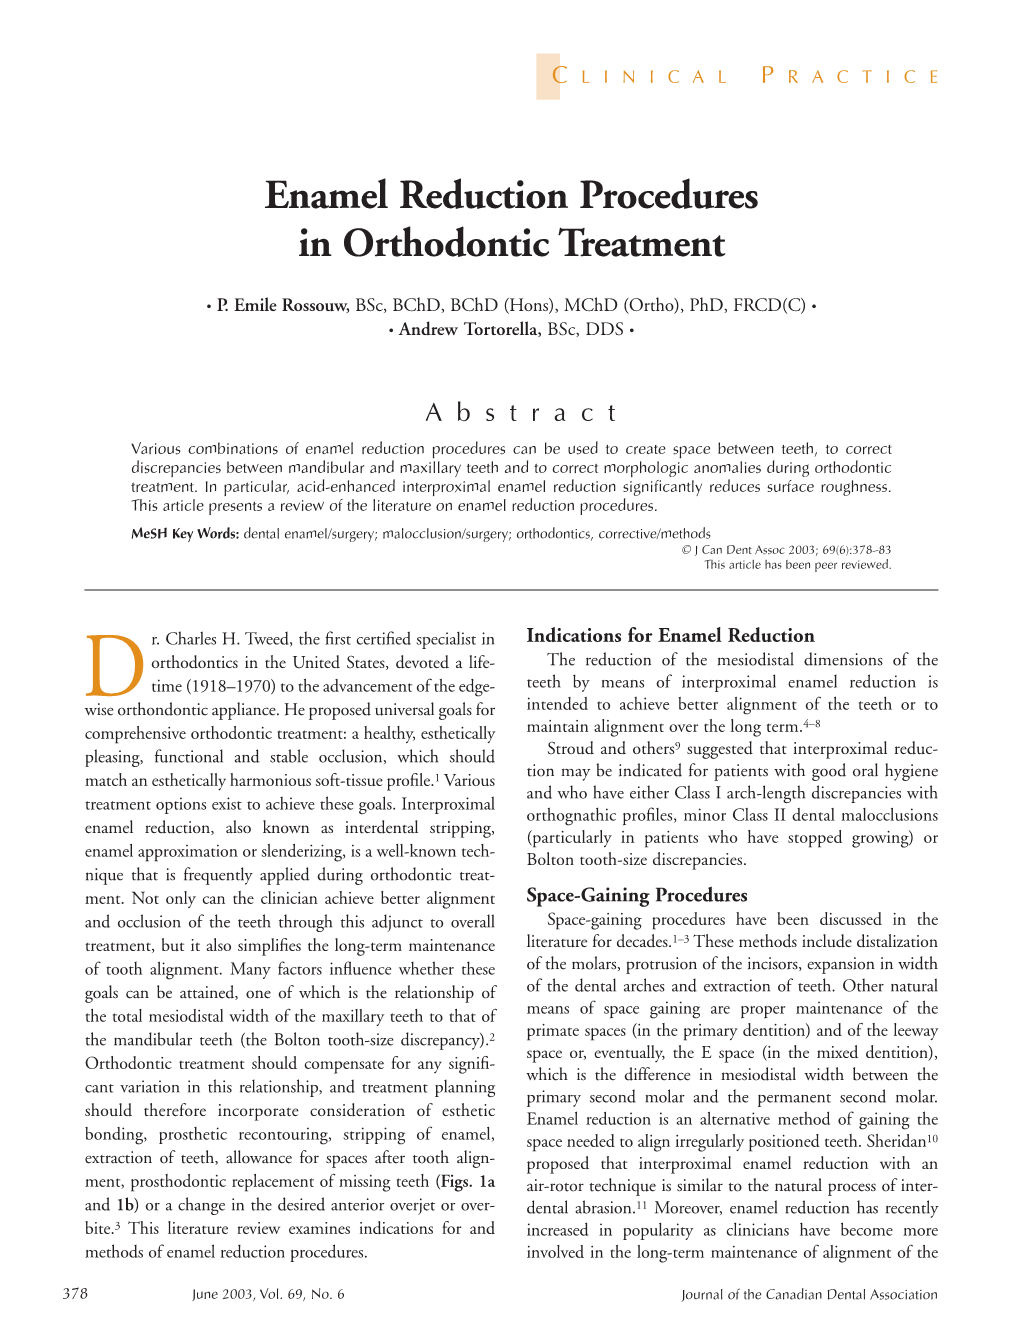 Enamel Reduction Procedures in Orthodontic Treatment